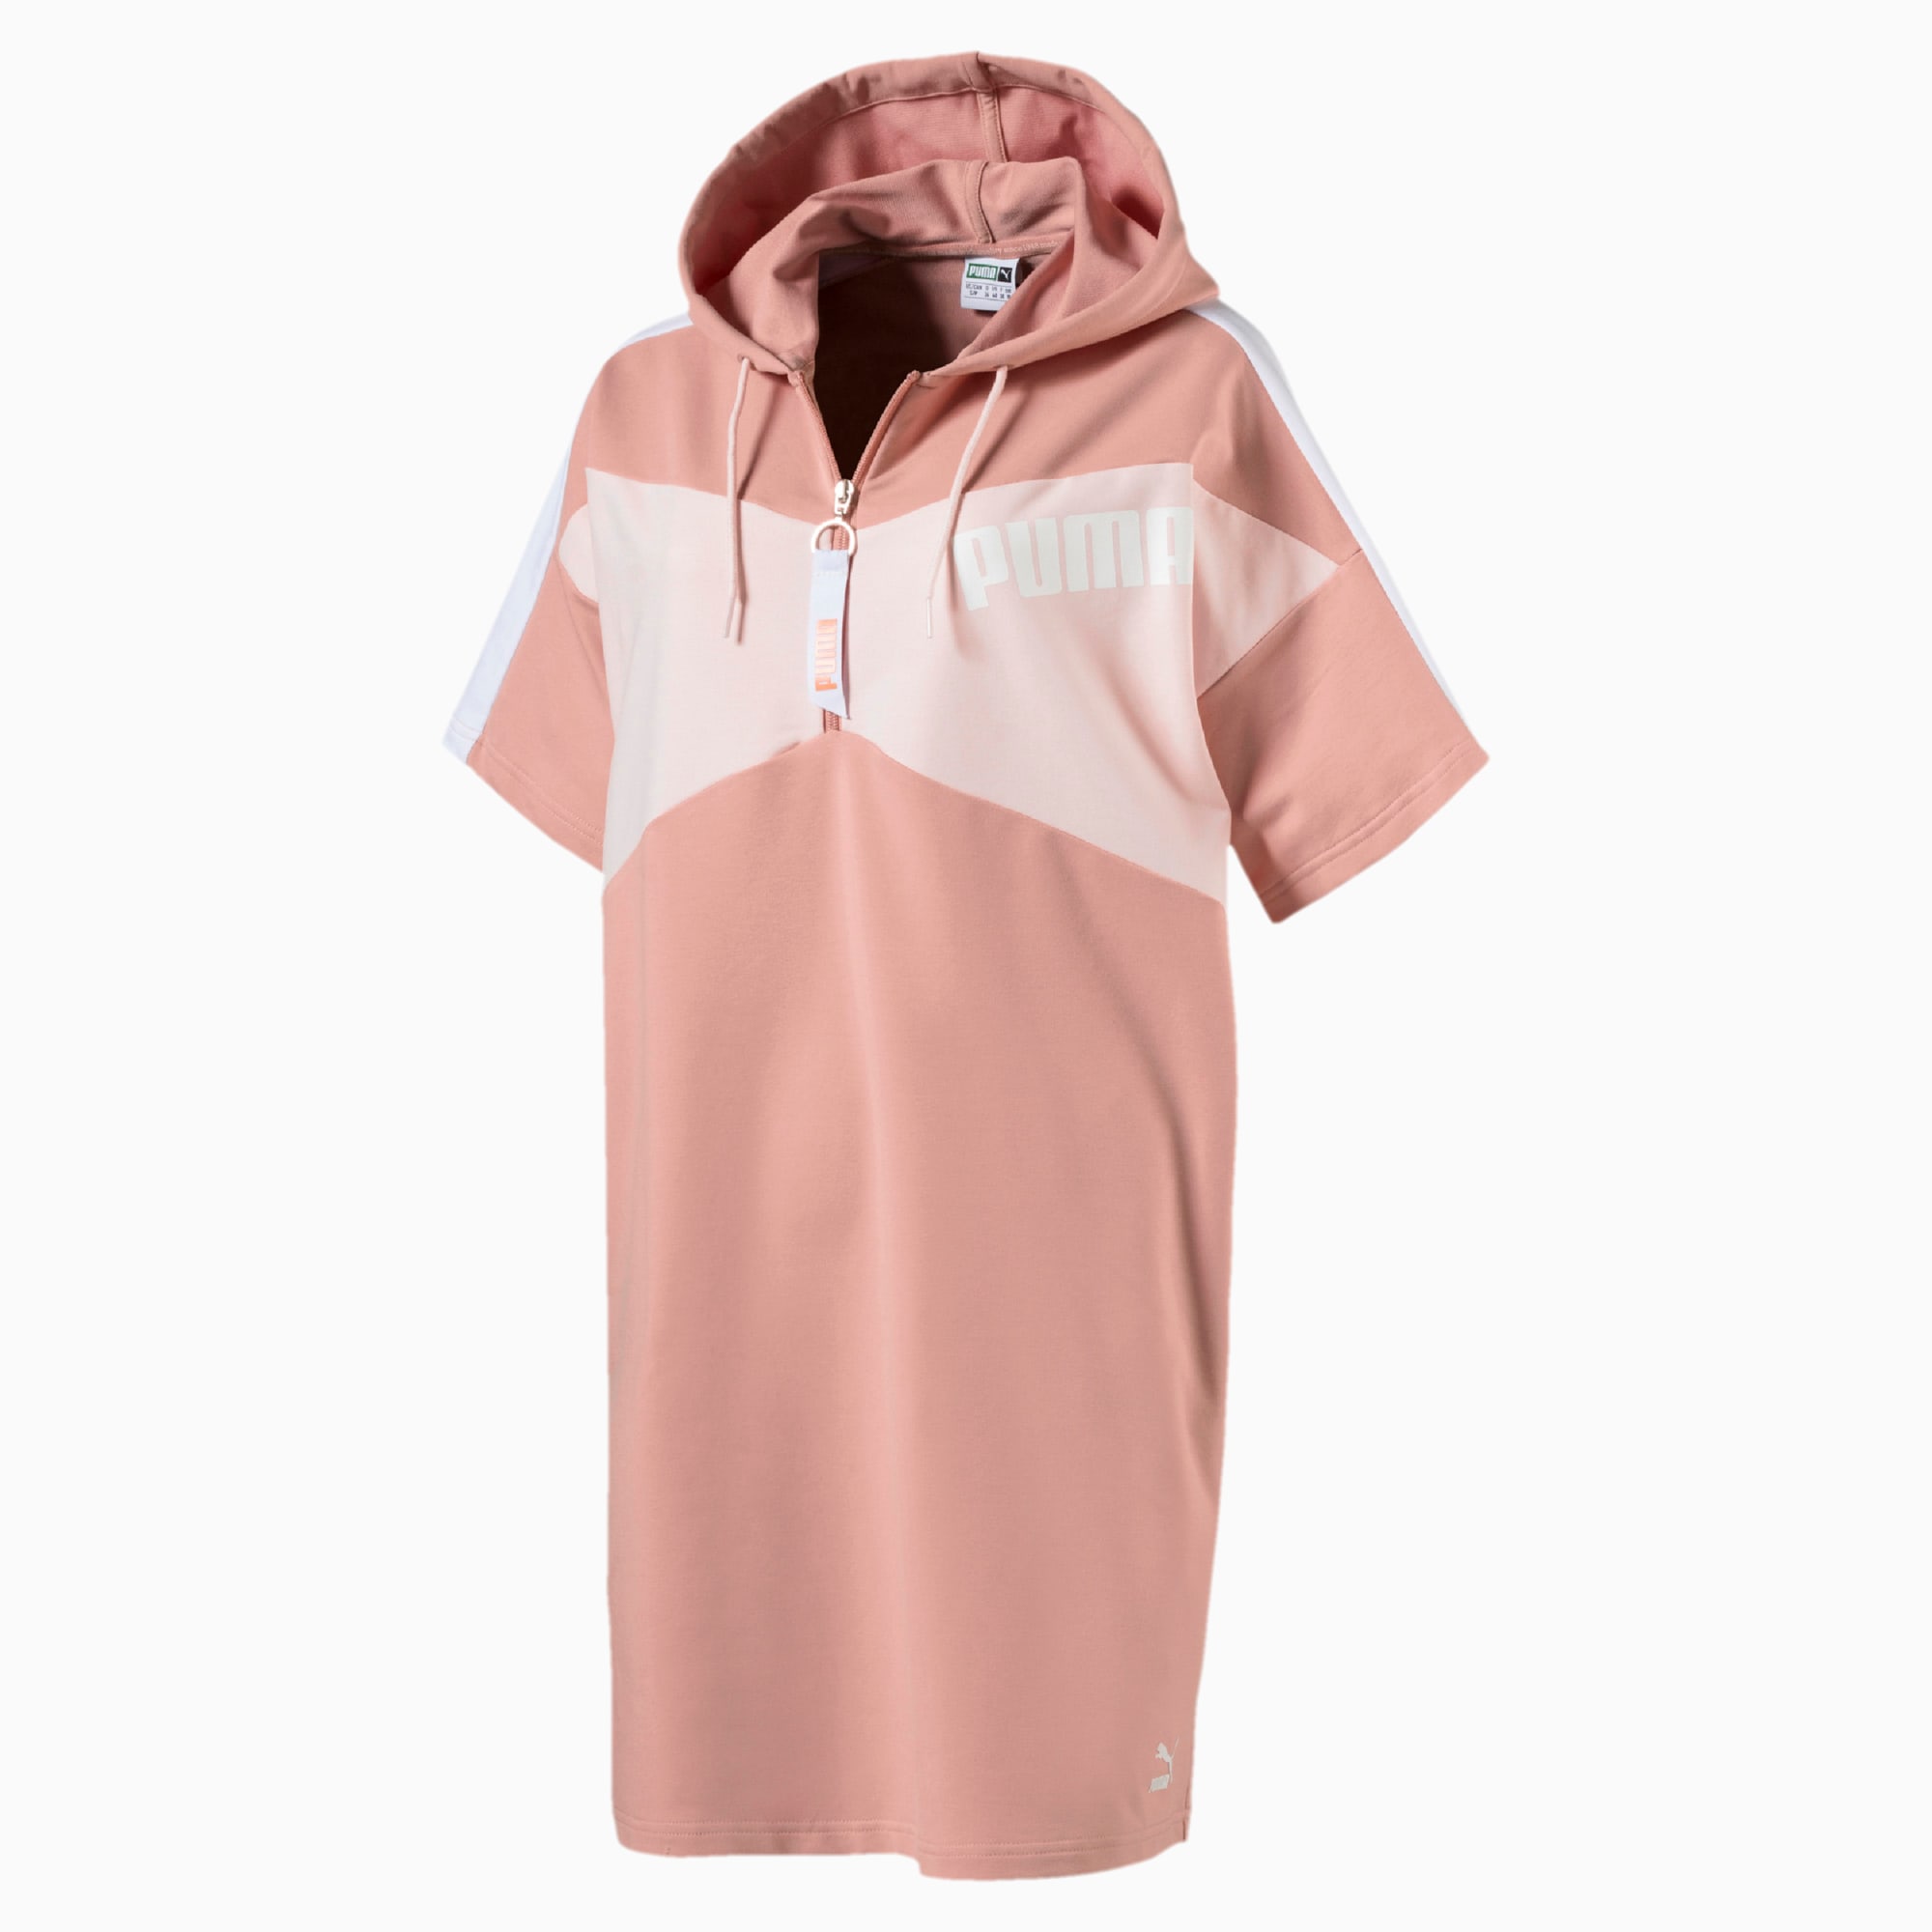 puma archive hooded dress